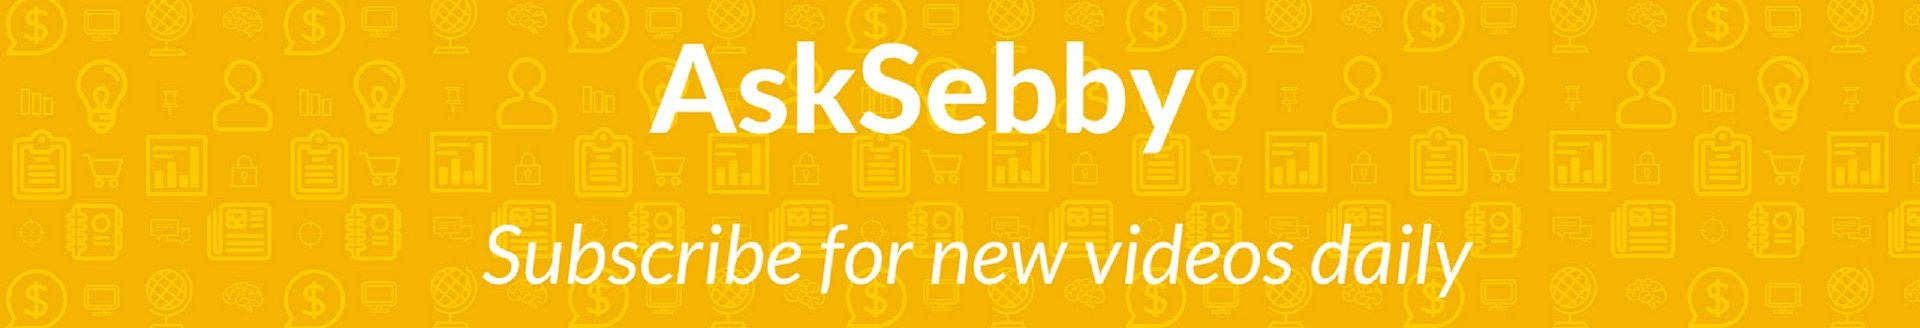 AskSebby channel banner